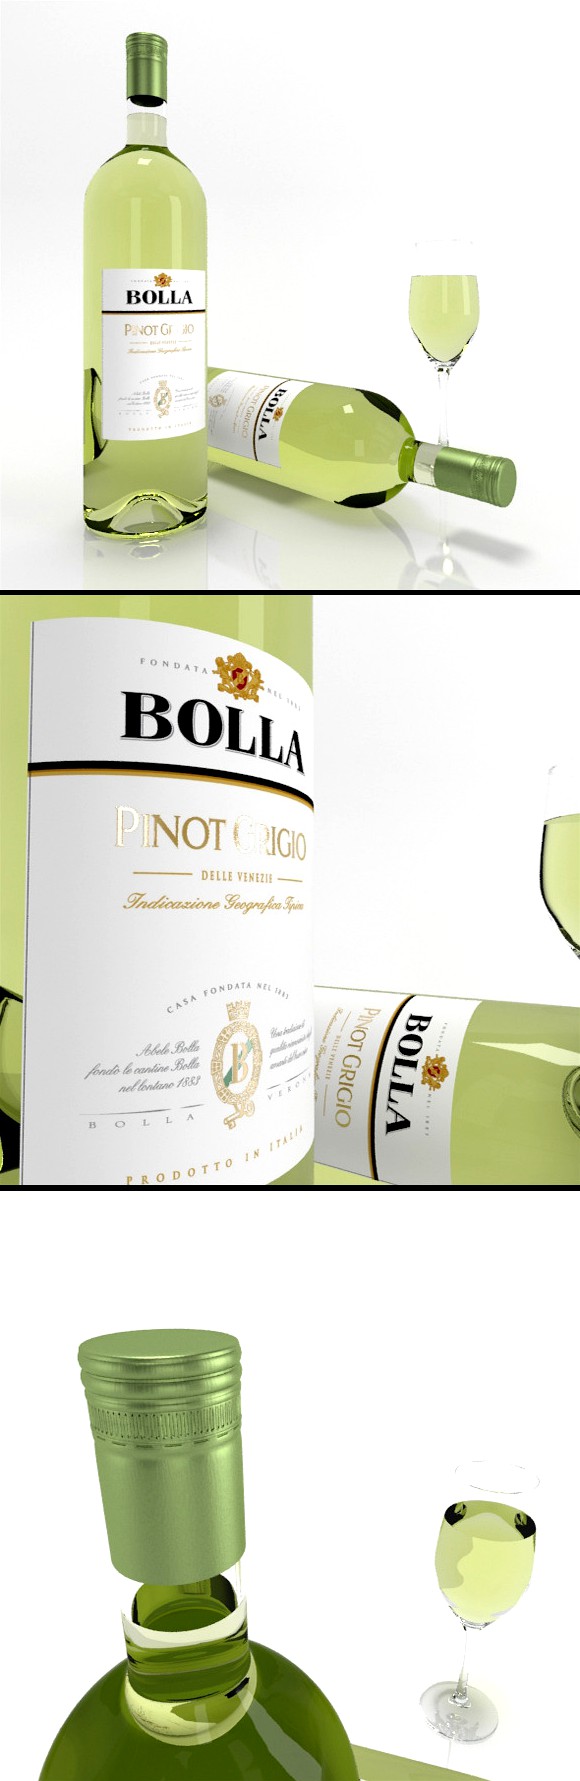 Pinot Grigio wine bottles &amp; full glass: Bolla